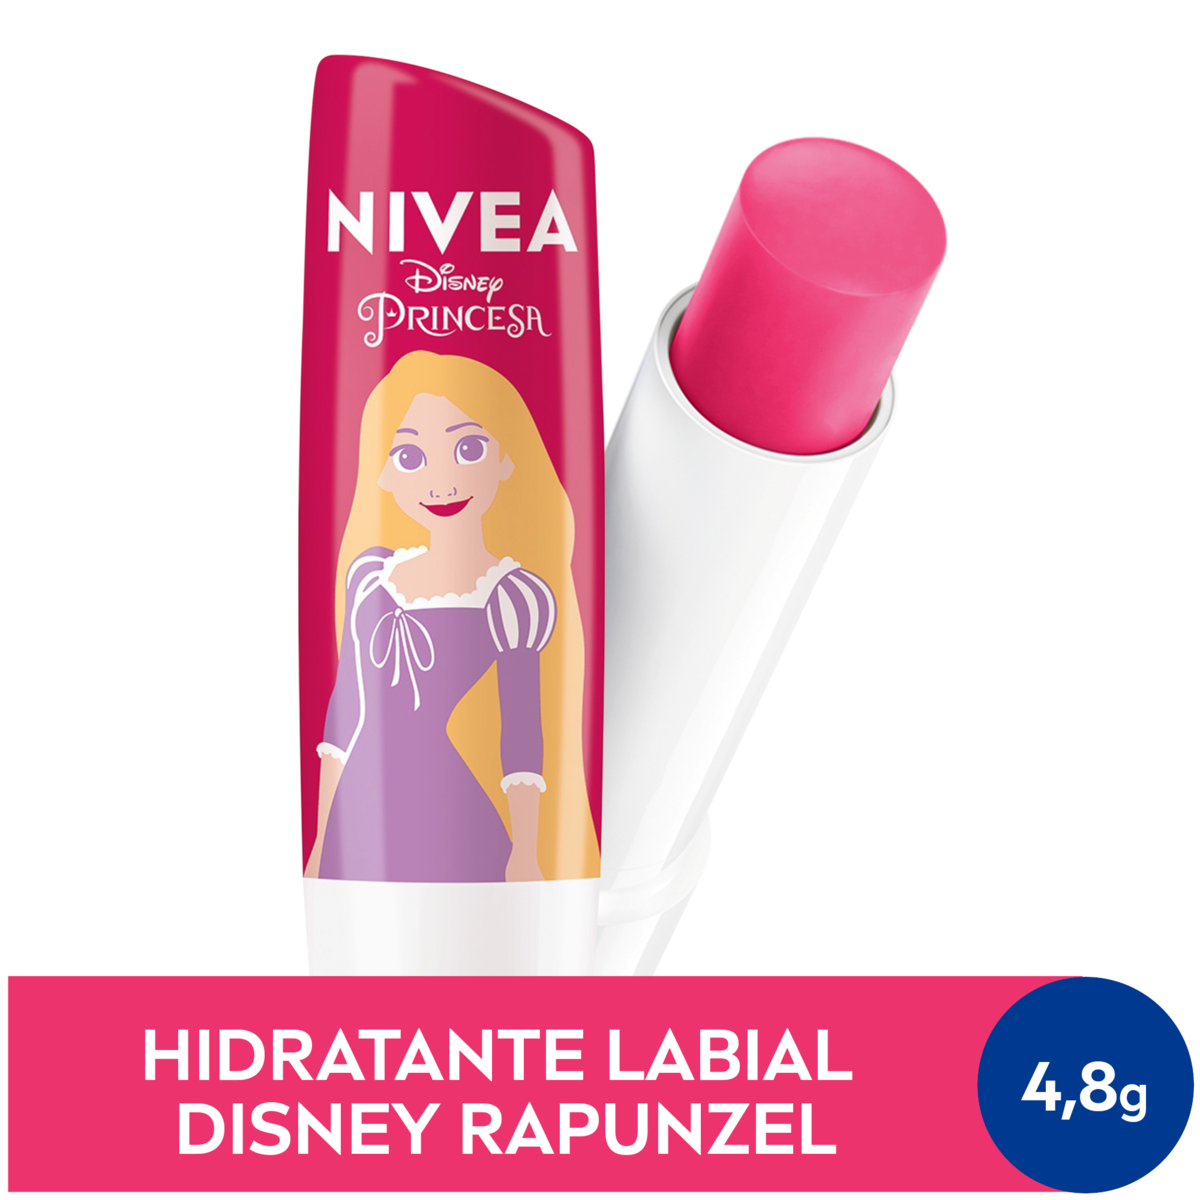 Hidratante Labial Nivea Disney Rapunzel Ed. Limitada Melancia Shine - 4,8g 4,8g